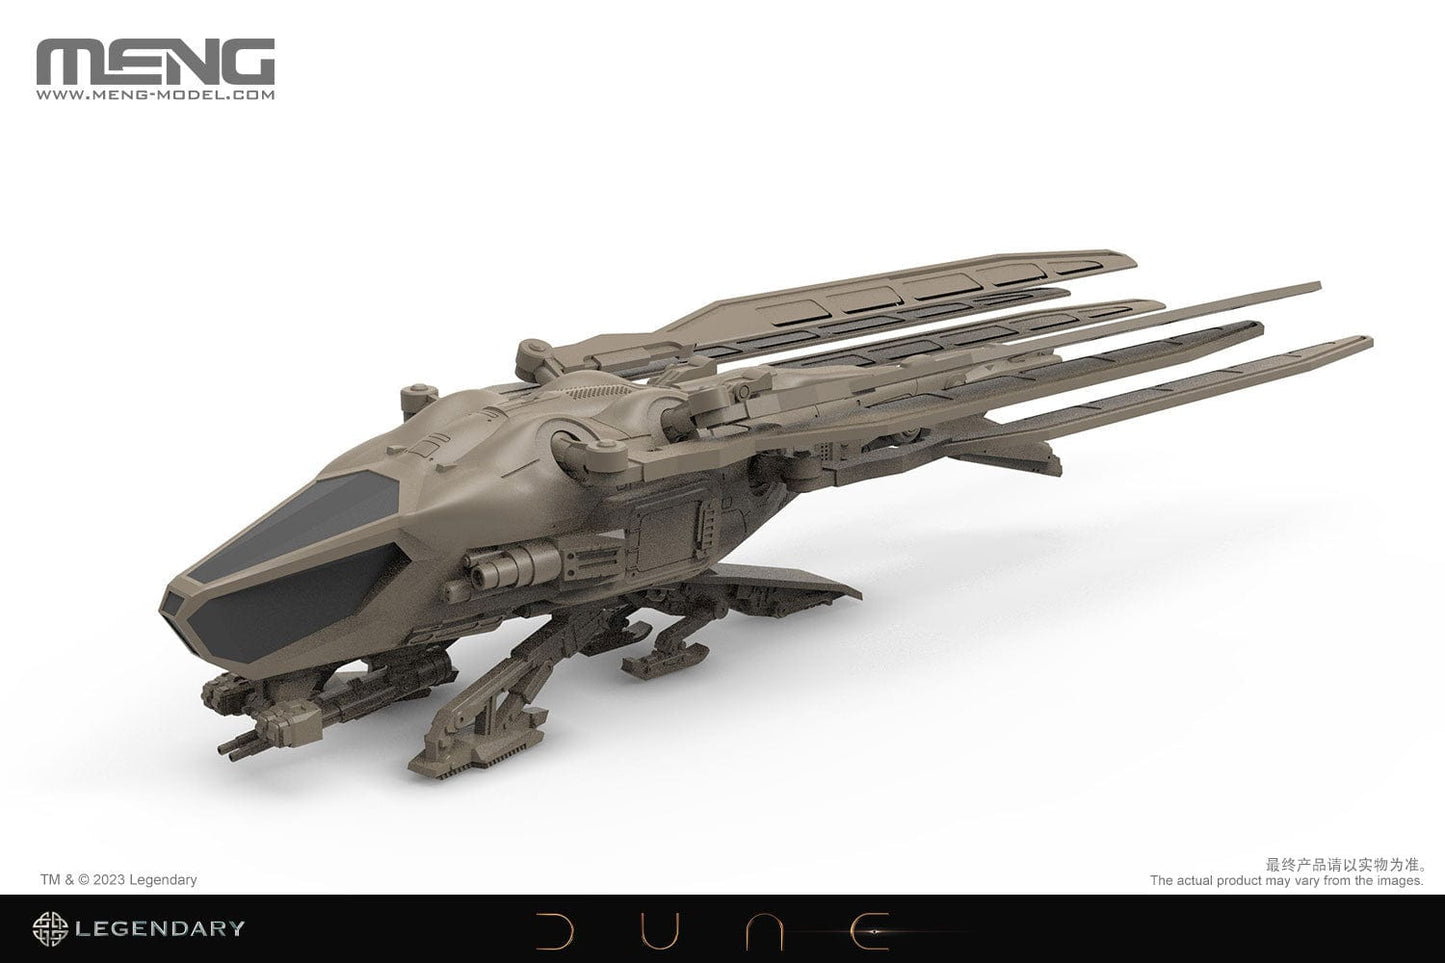 Meng Scale Model Kits Dune: Harkonnen Ornithopter